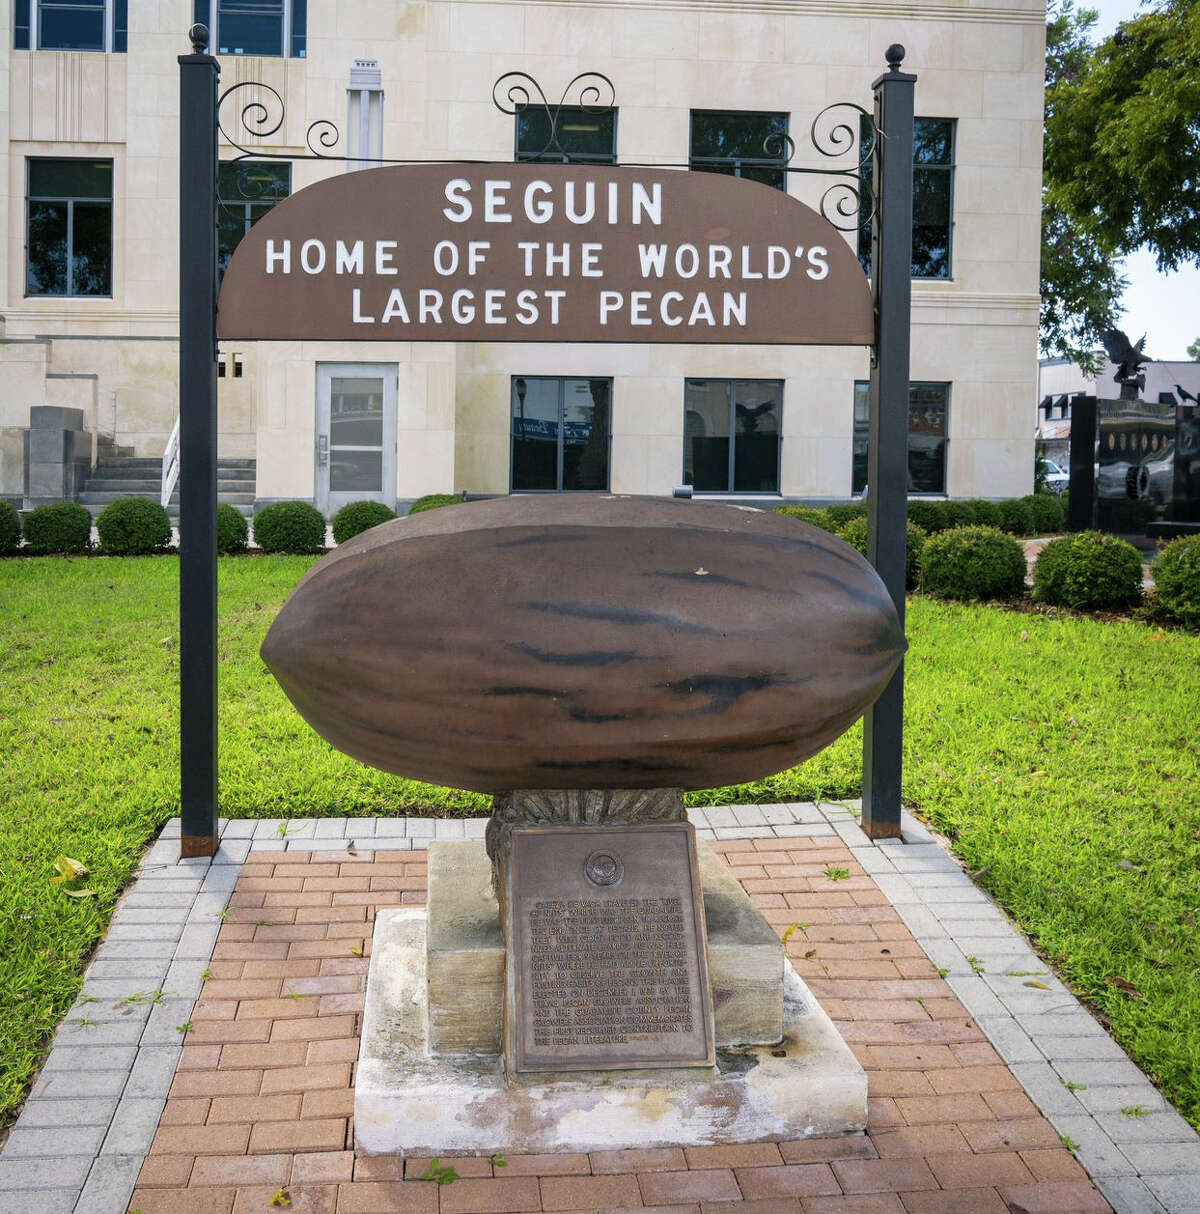 The Original World's Largest Pecan is located in Seguin, Texas.